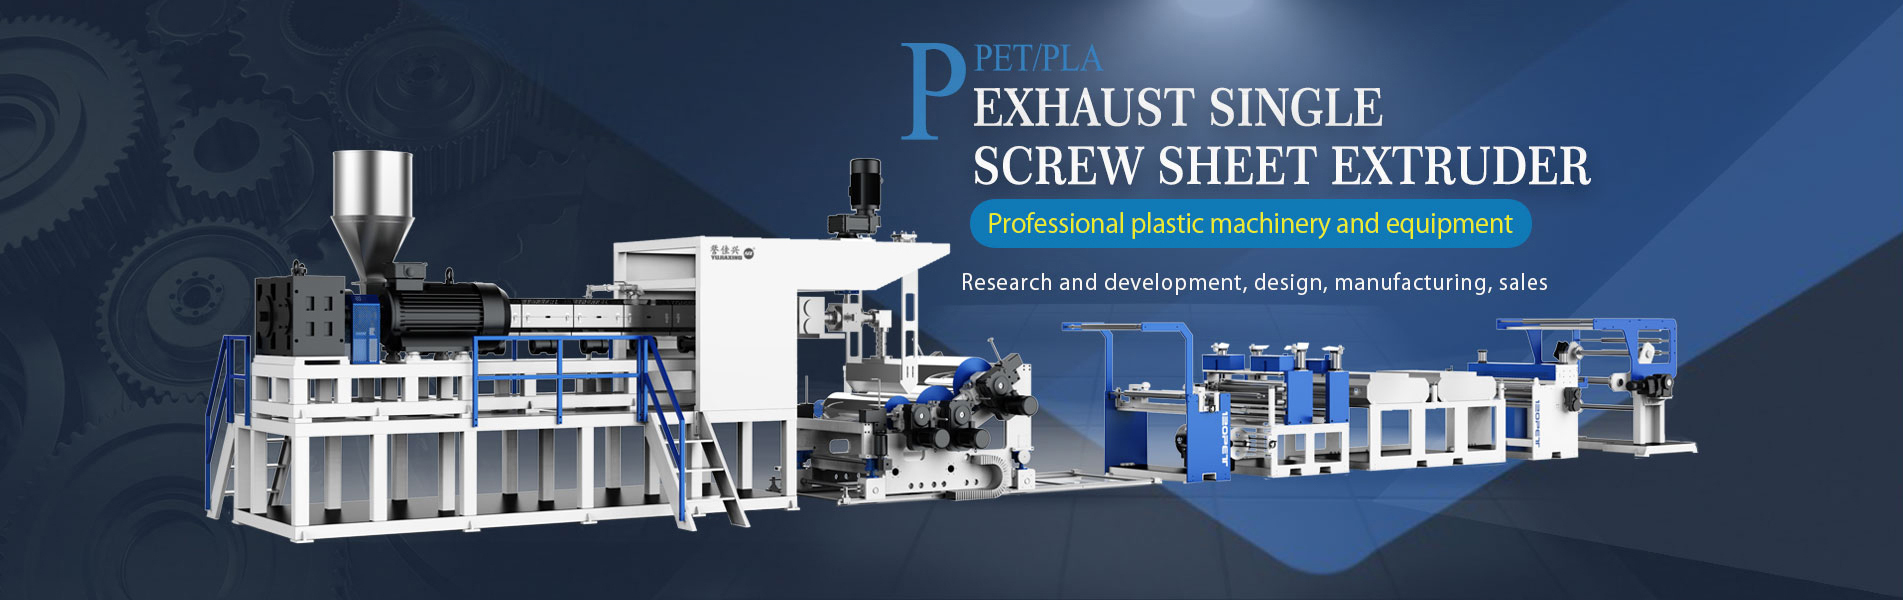 Professional plastic machinery and equipment